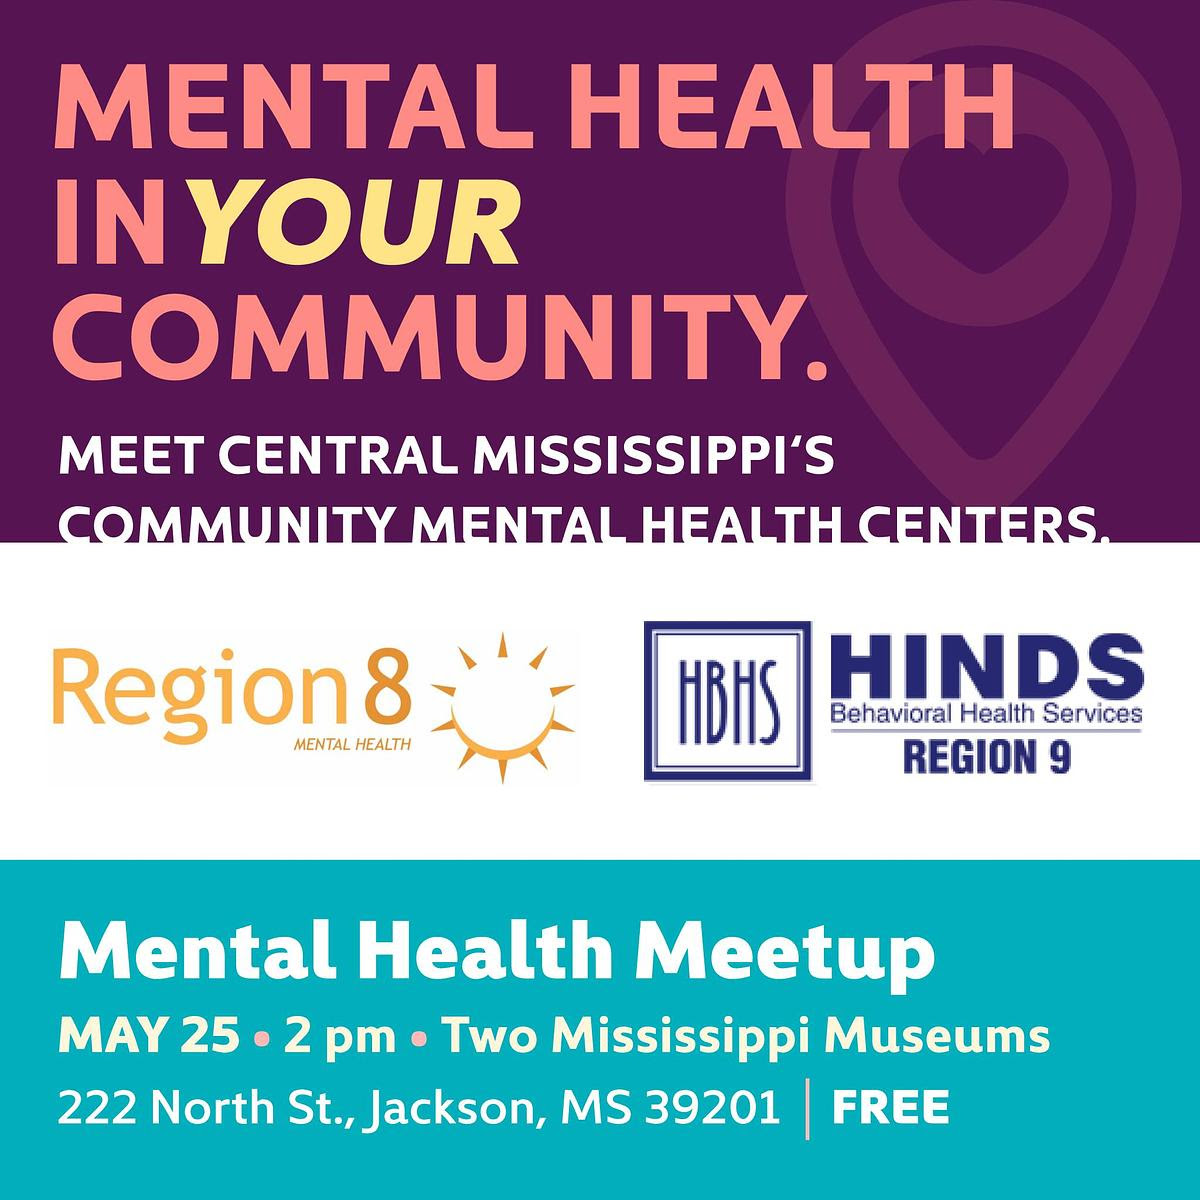 Mental Health Meetup flyer